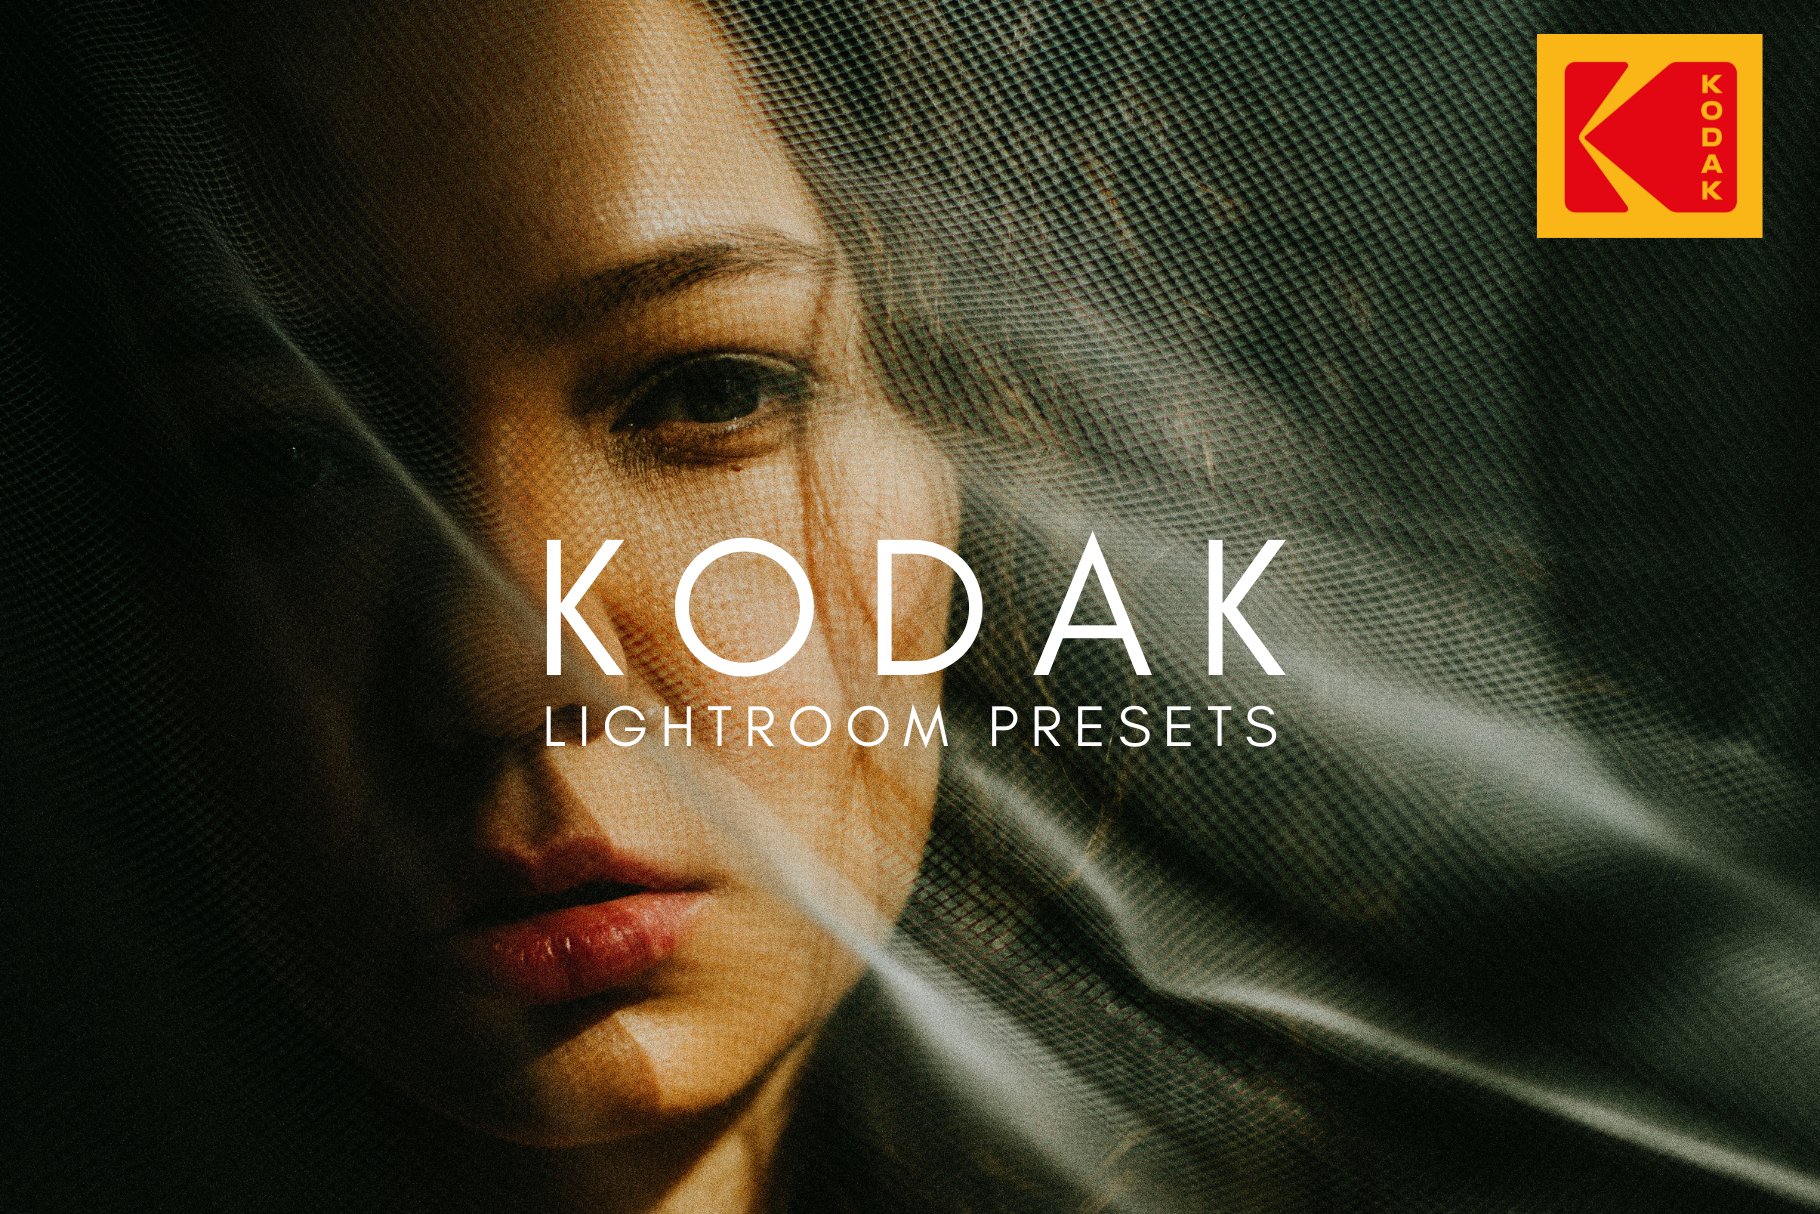 32 Kodak Gold Lightroom Presetscover image.